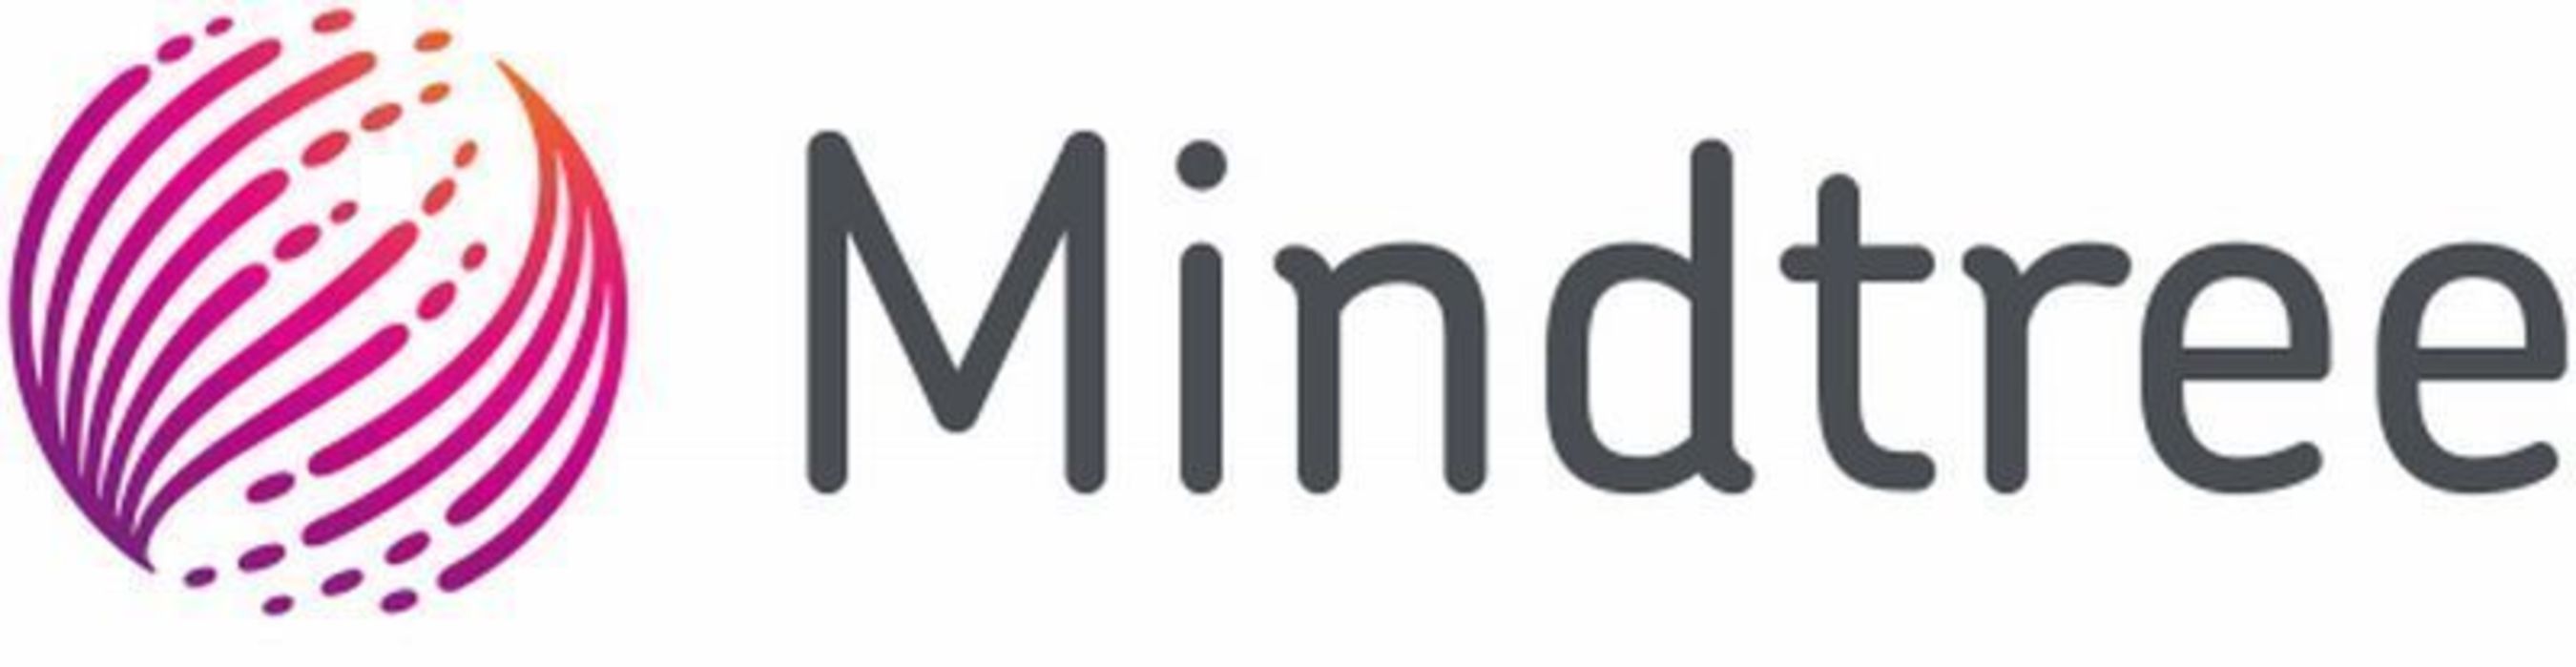 Mindtree Logo (PRNewsFoto/Mindtree)